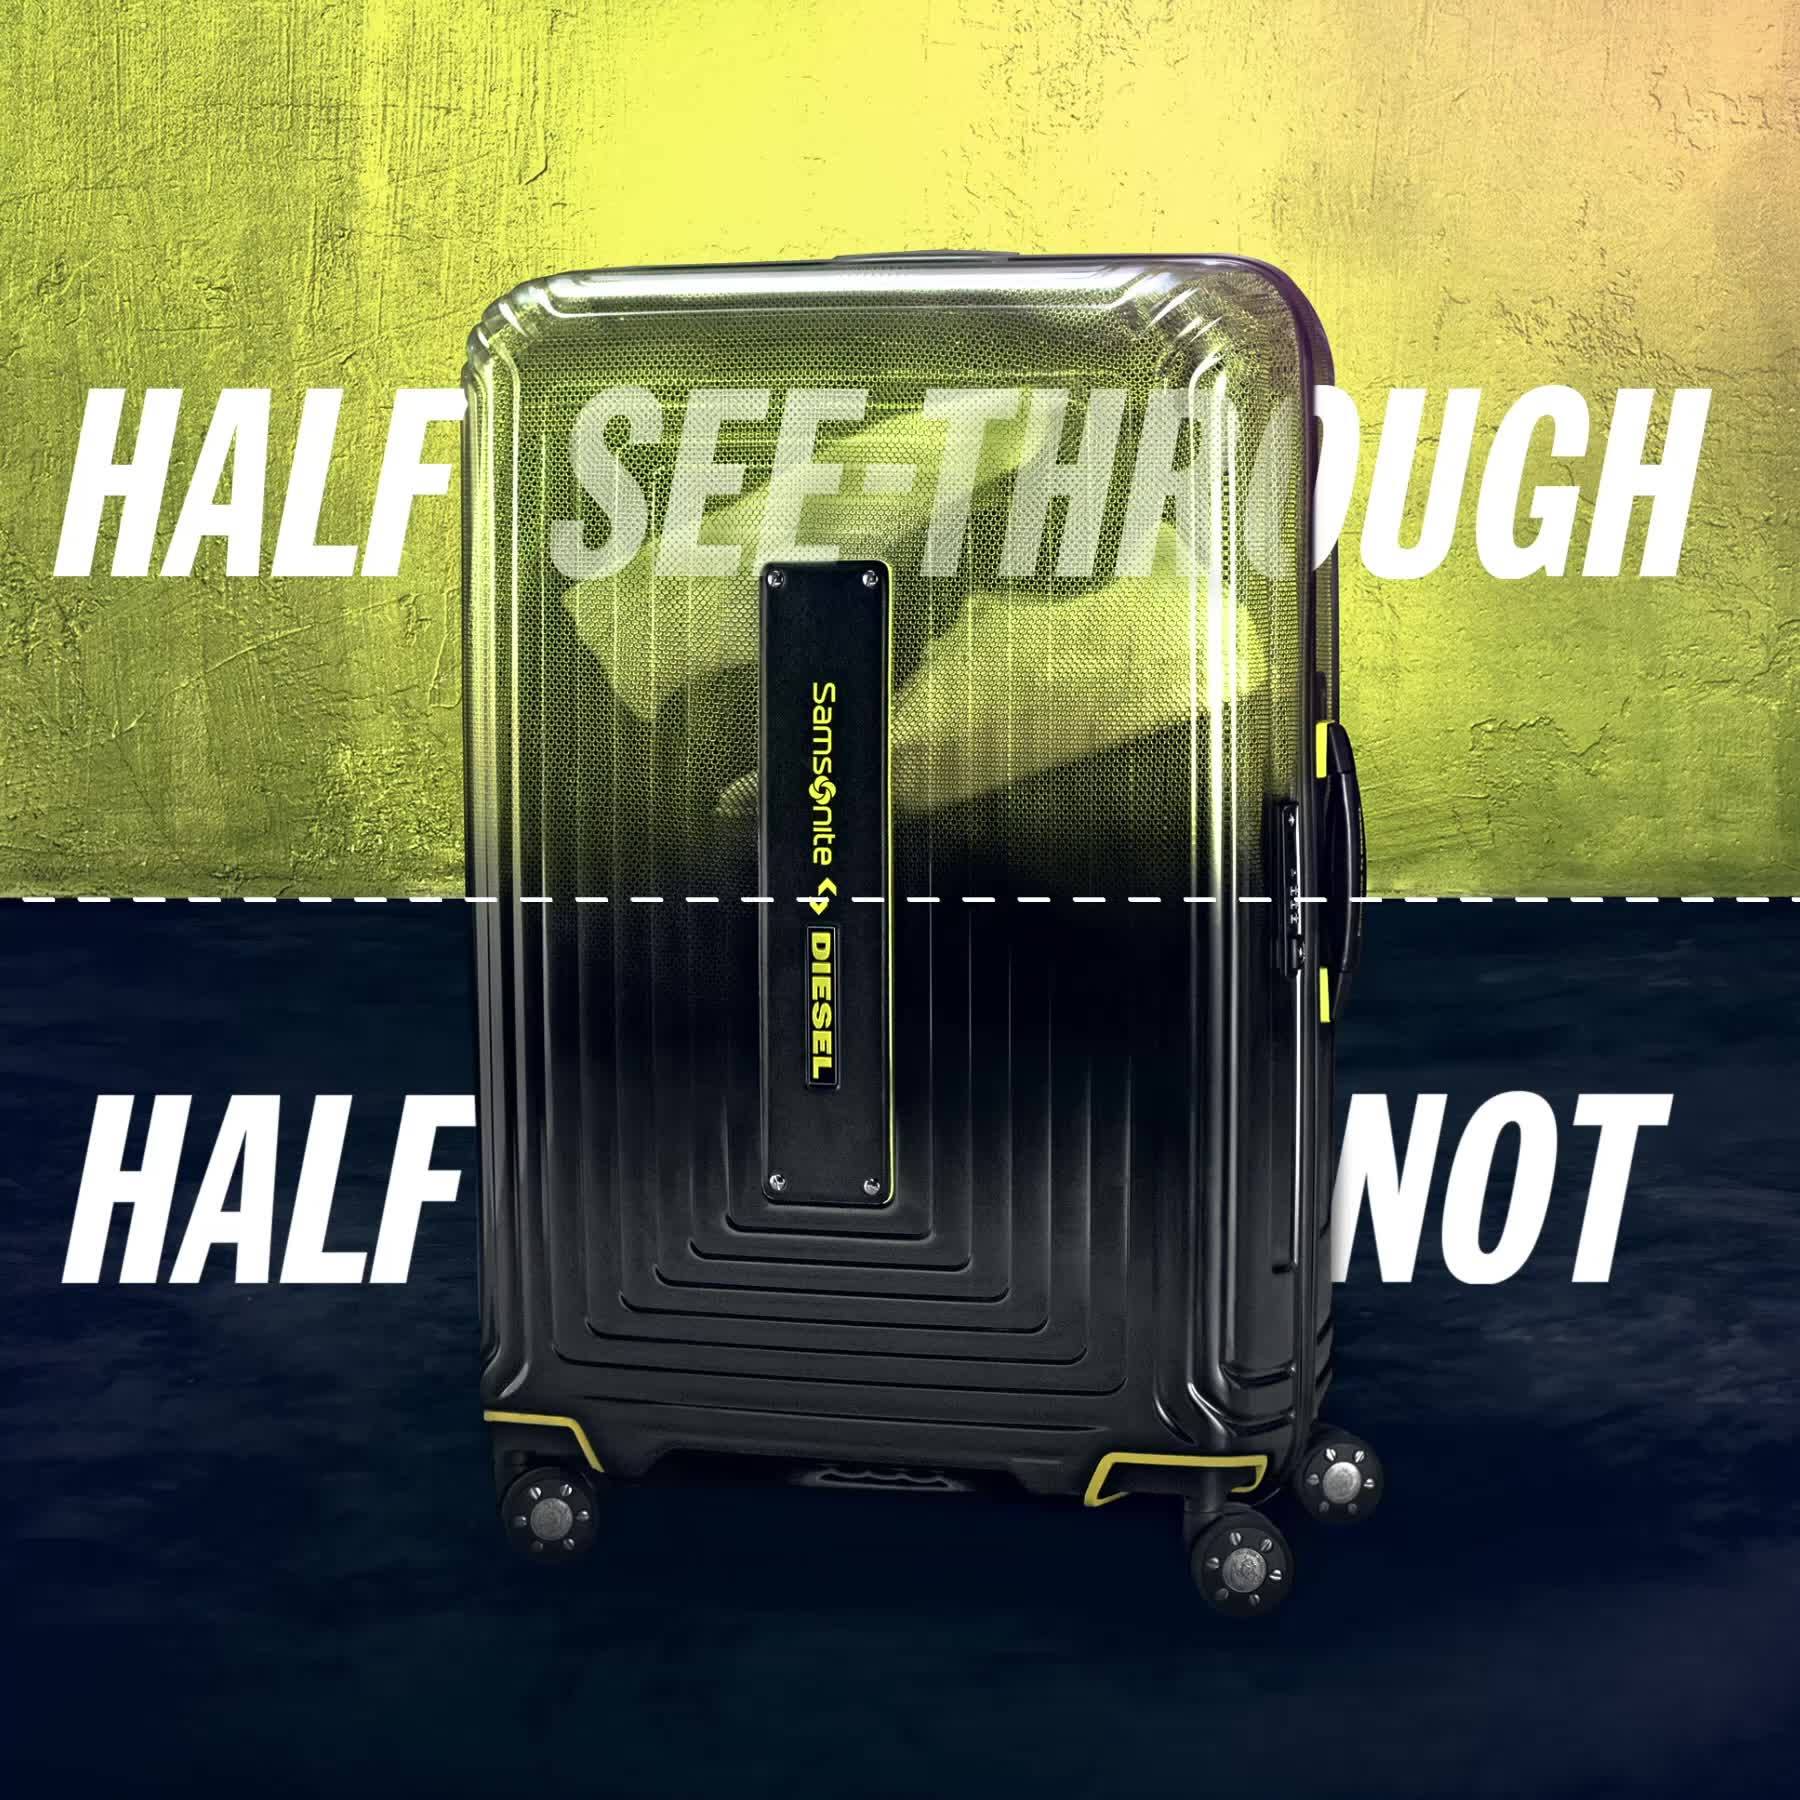 【HALF SEE-THROUGH, HALF NOT.】 誰說行李箱一定要密不透光，保持神秘？Samsonite NEOPULSE X DIESEL™系列顛覆固有印象，為傳統行李箱注入半透明元素，呈現旅人不羈的自我風格。馬上選購，以低調方式釋放高調態度。 NEOPULSE X DIESEL™ 系列銷售點：...